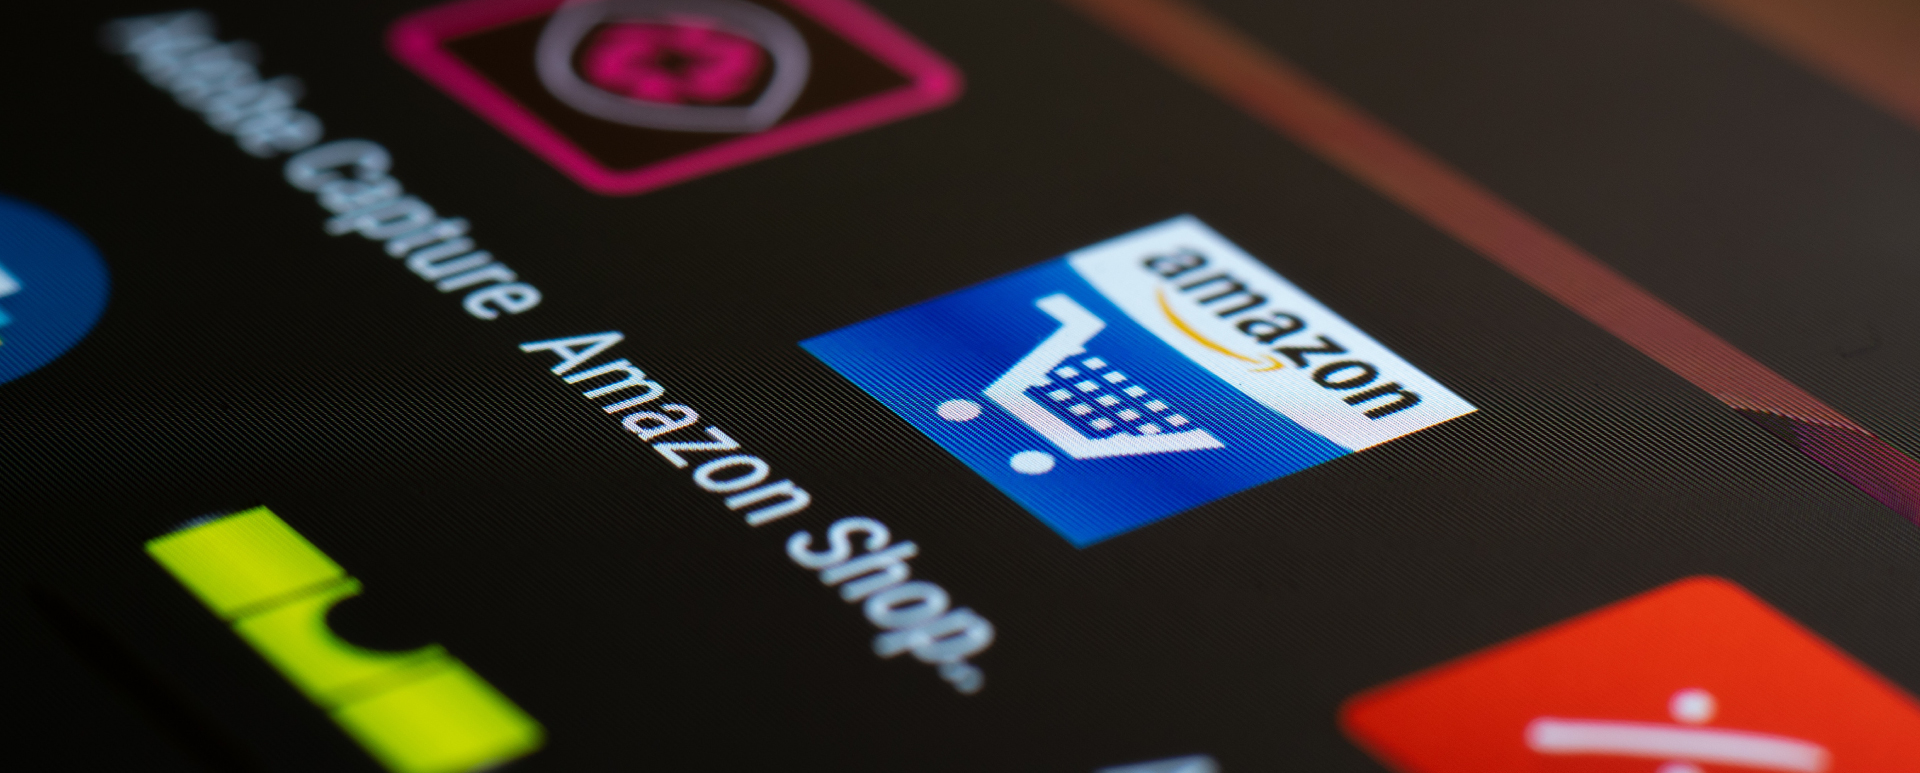 Amazon shopping app logo.